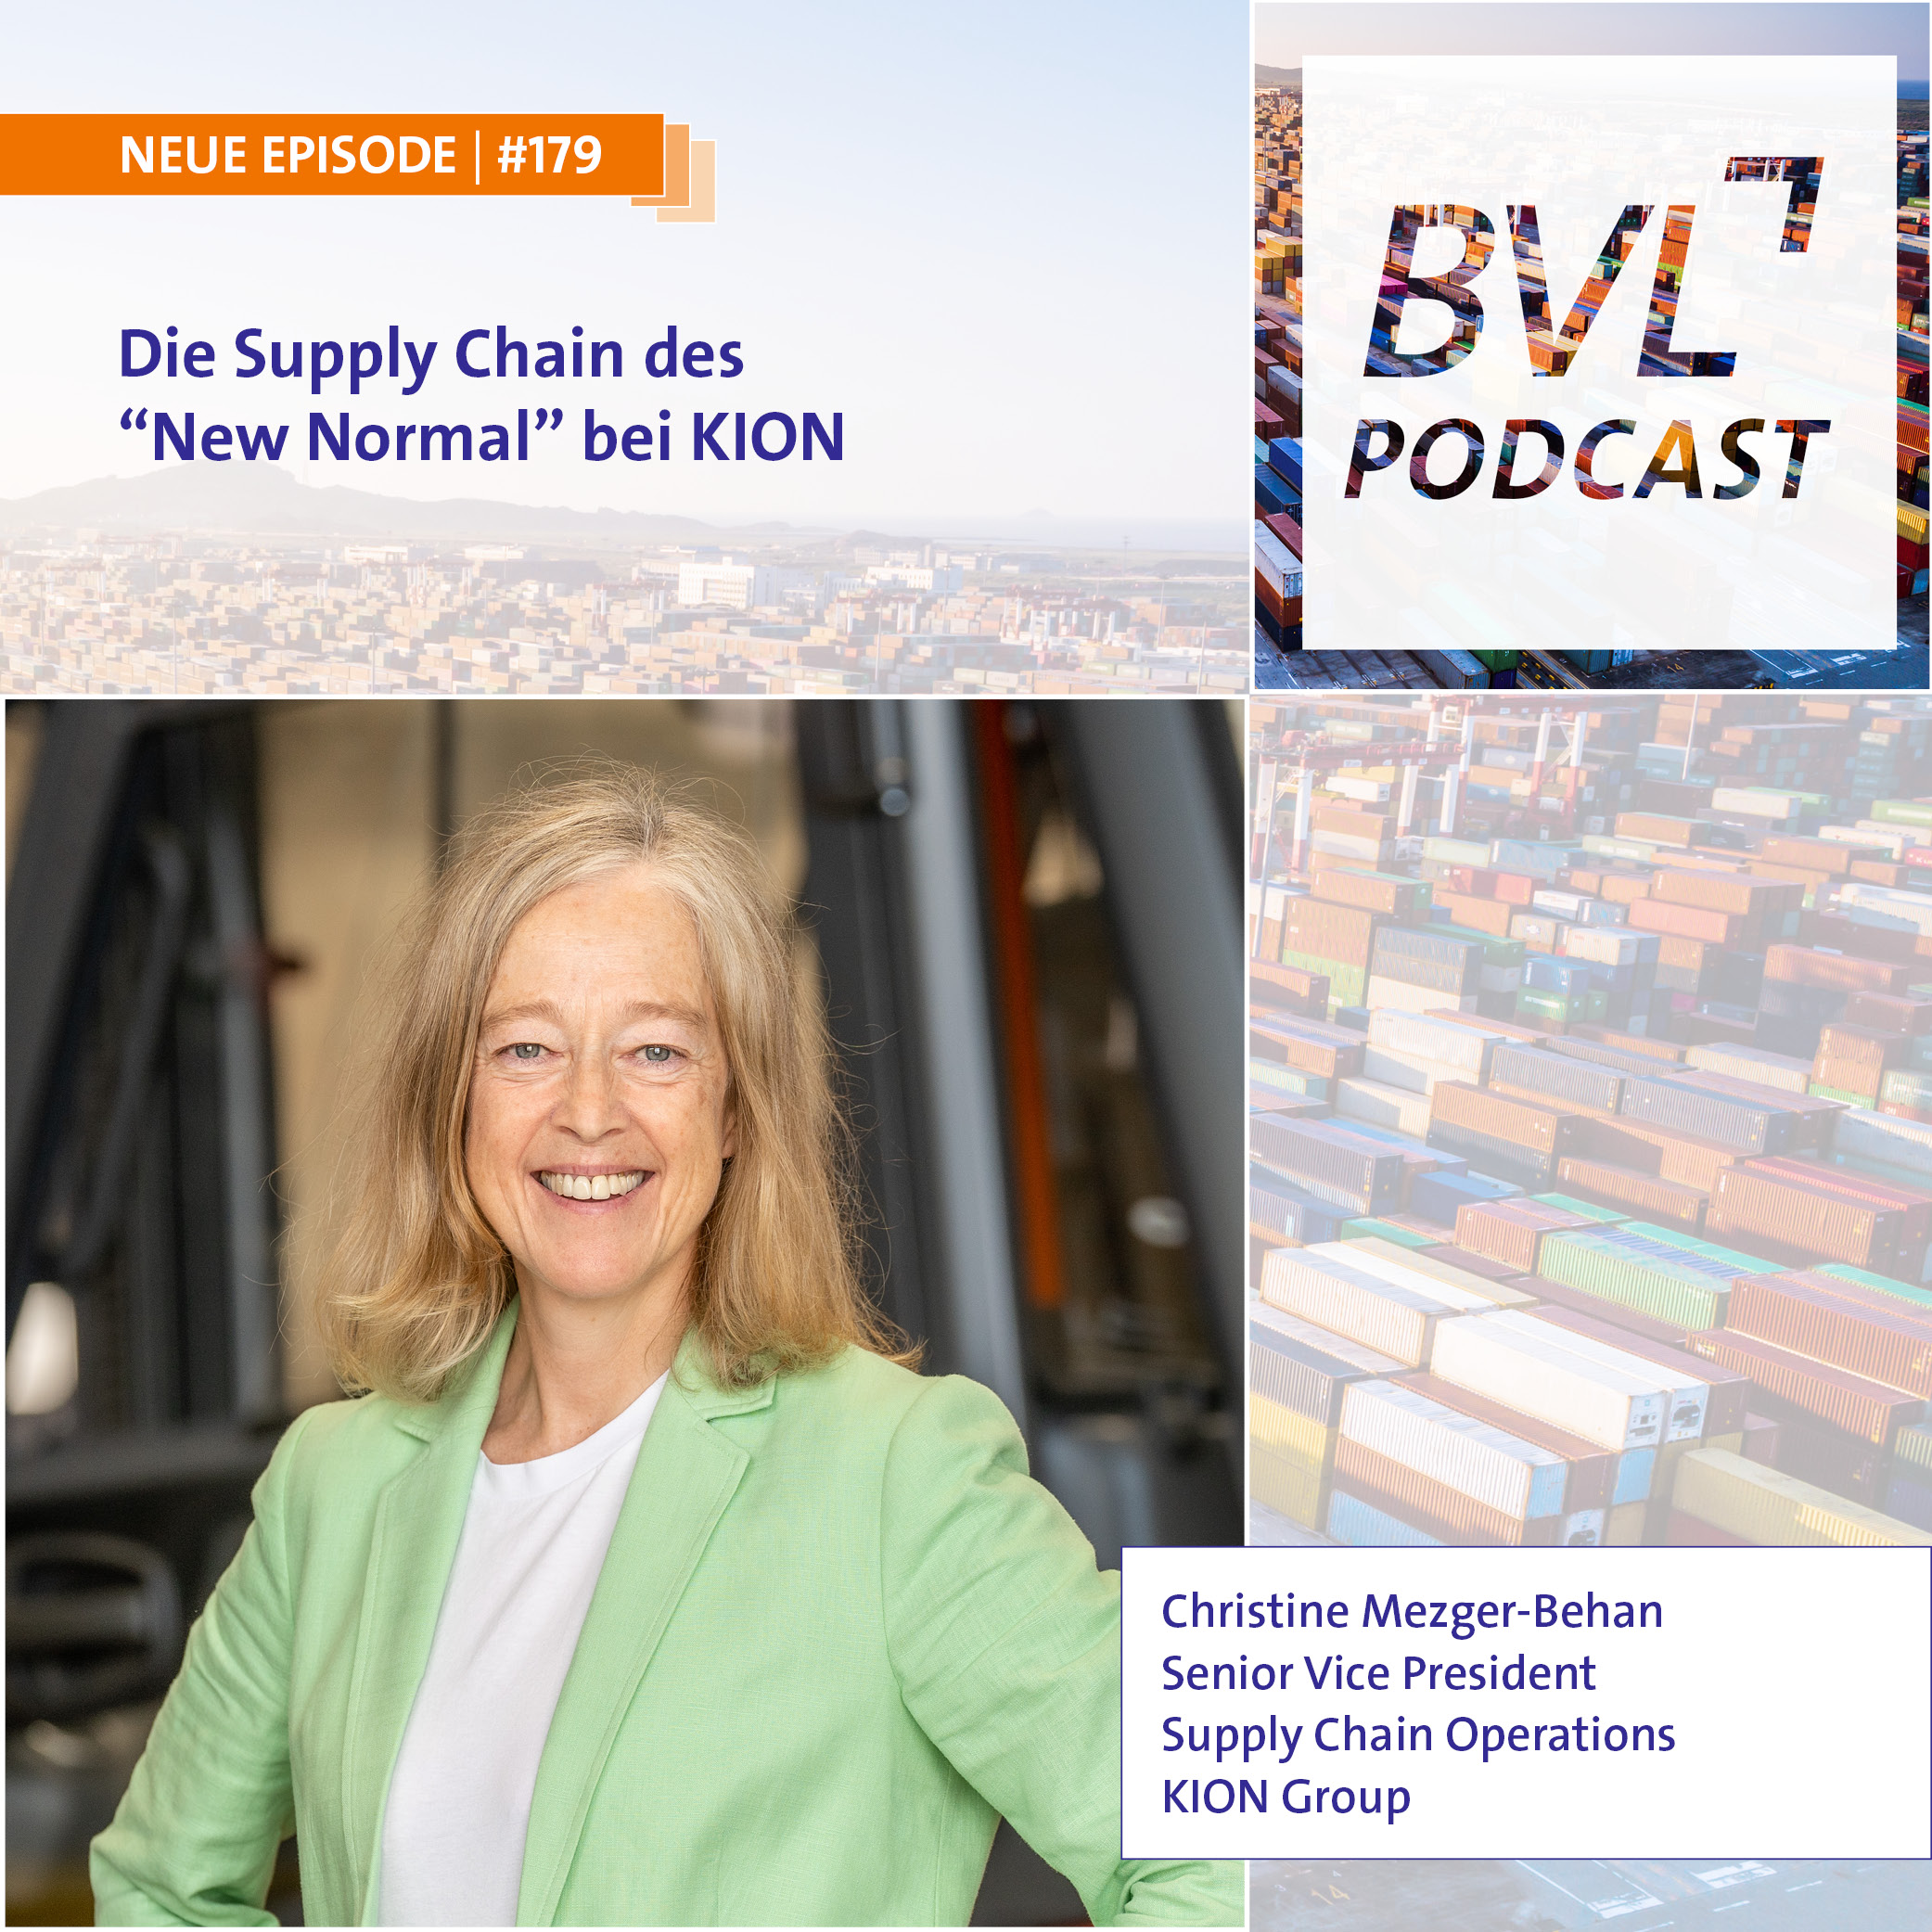 Christine Mezger-Behan, Senior Vice President Supply Chain Operations, KION Group